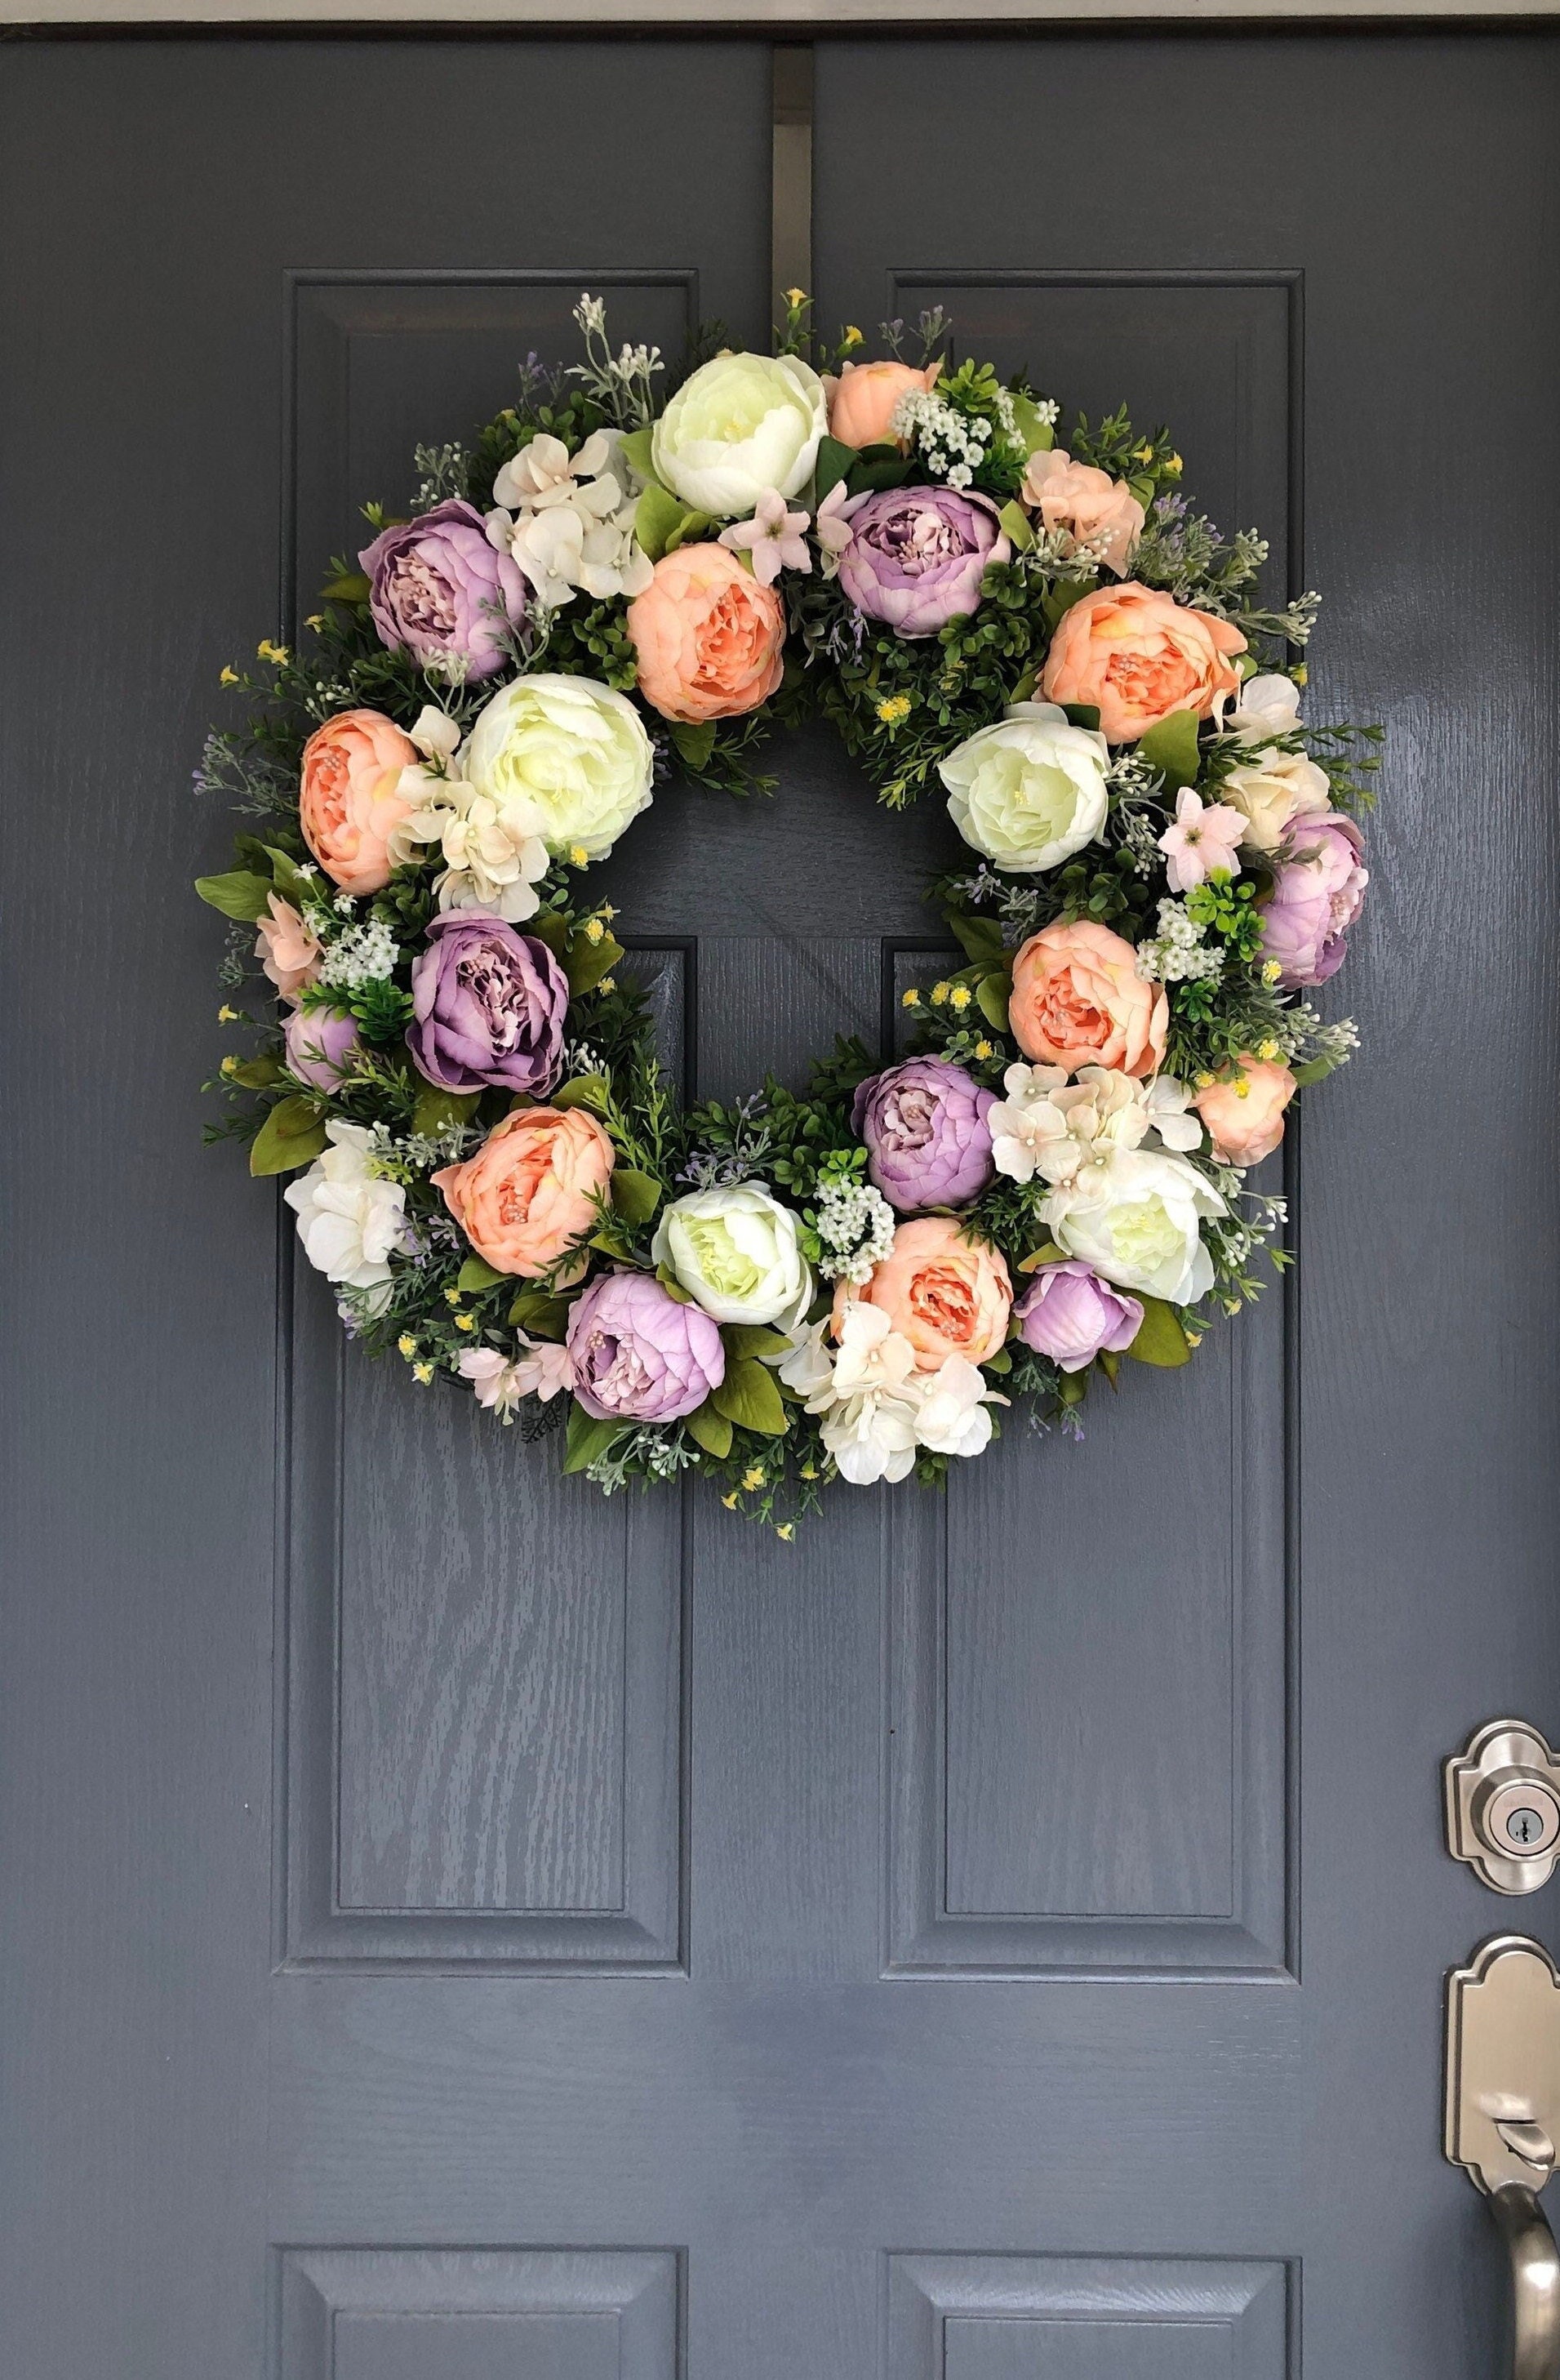 Spring wreath- lavender peony wreath